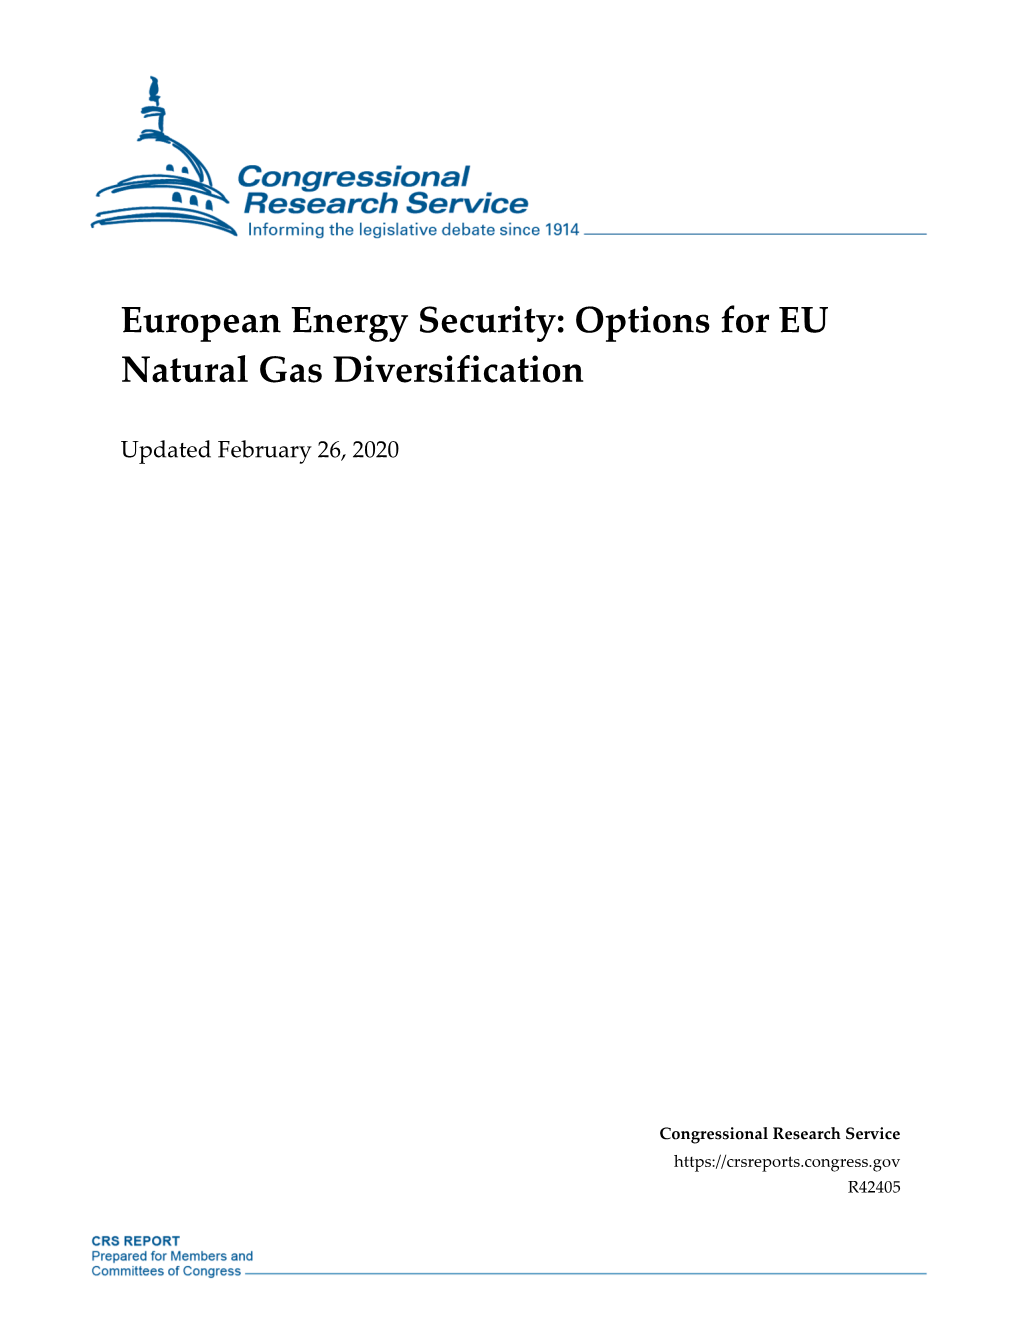 European Energy Security: Options for EU Natural Gas Diversification